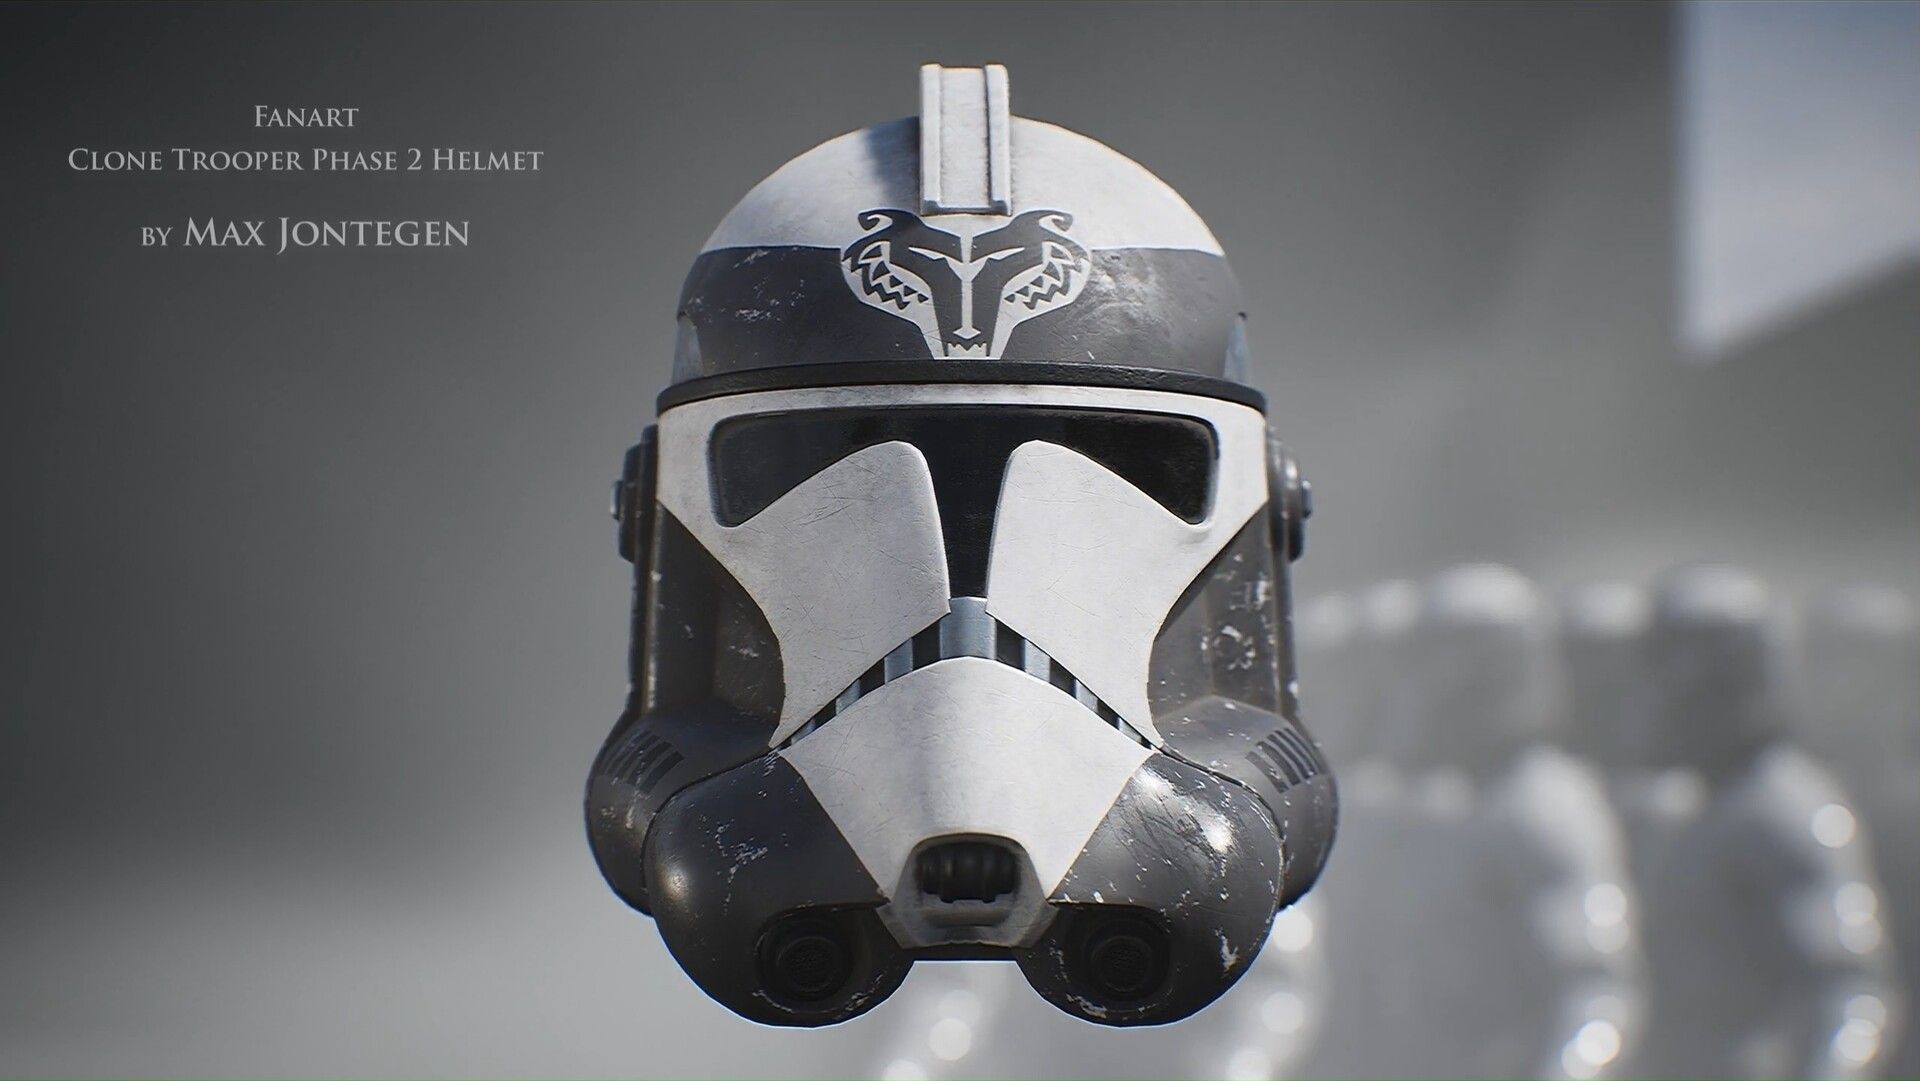 Clone Trooper Phase 2 Helmet, Max Jontegen